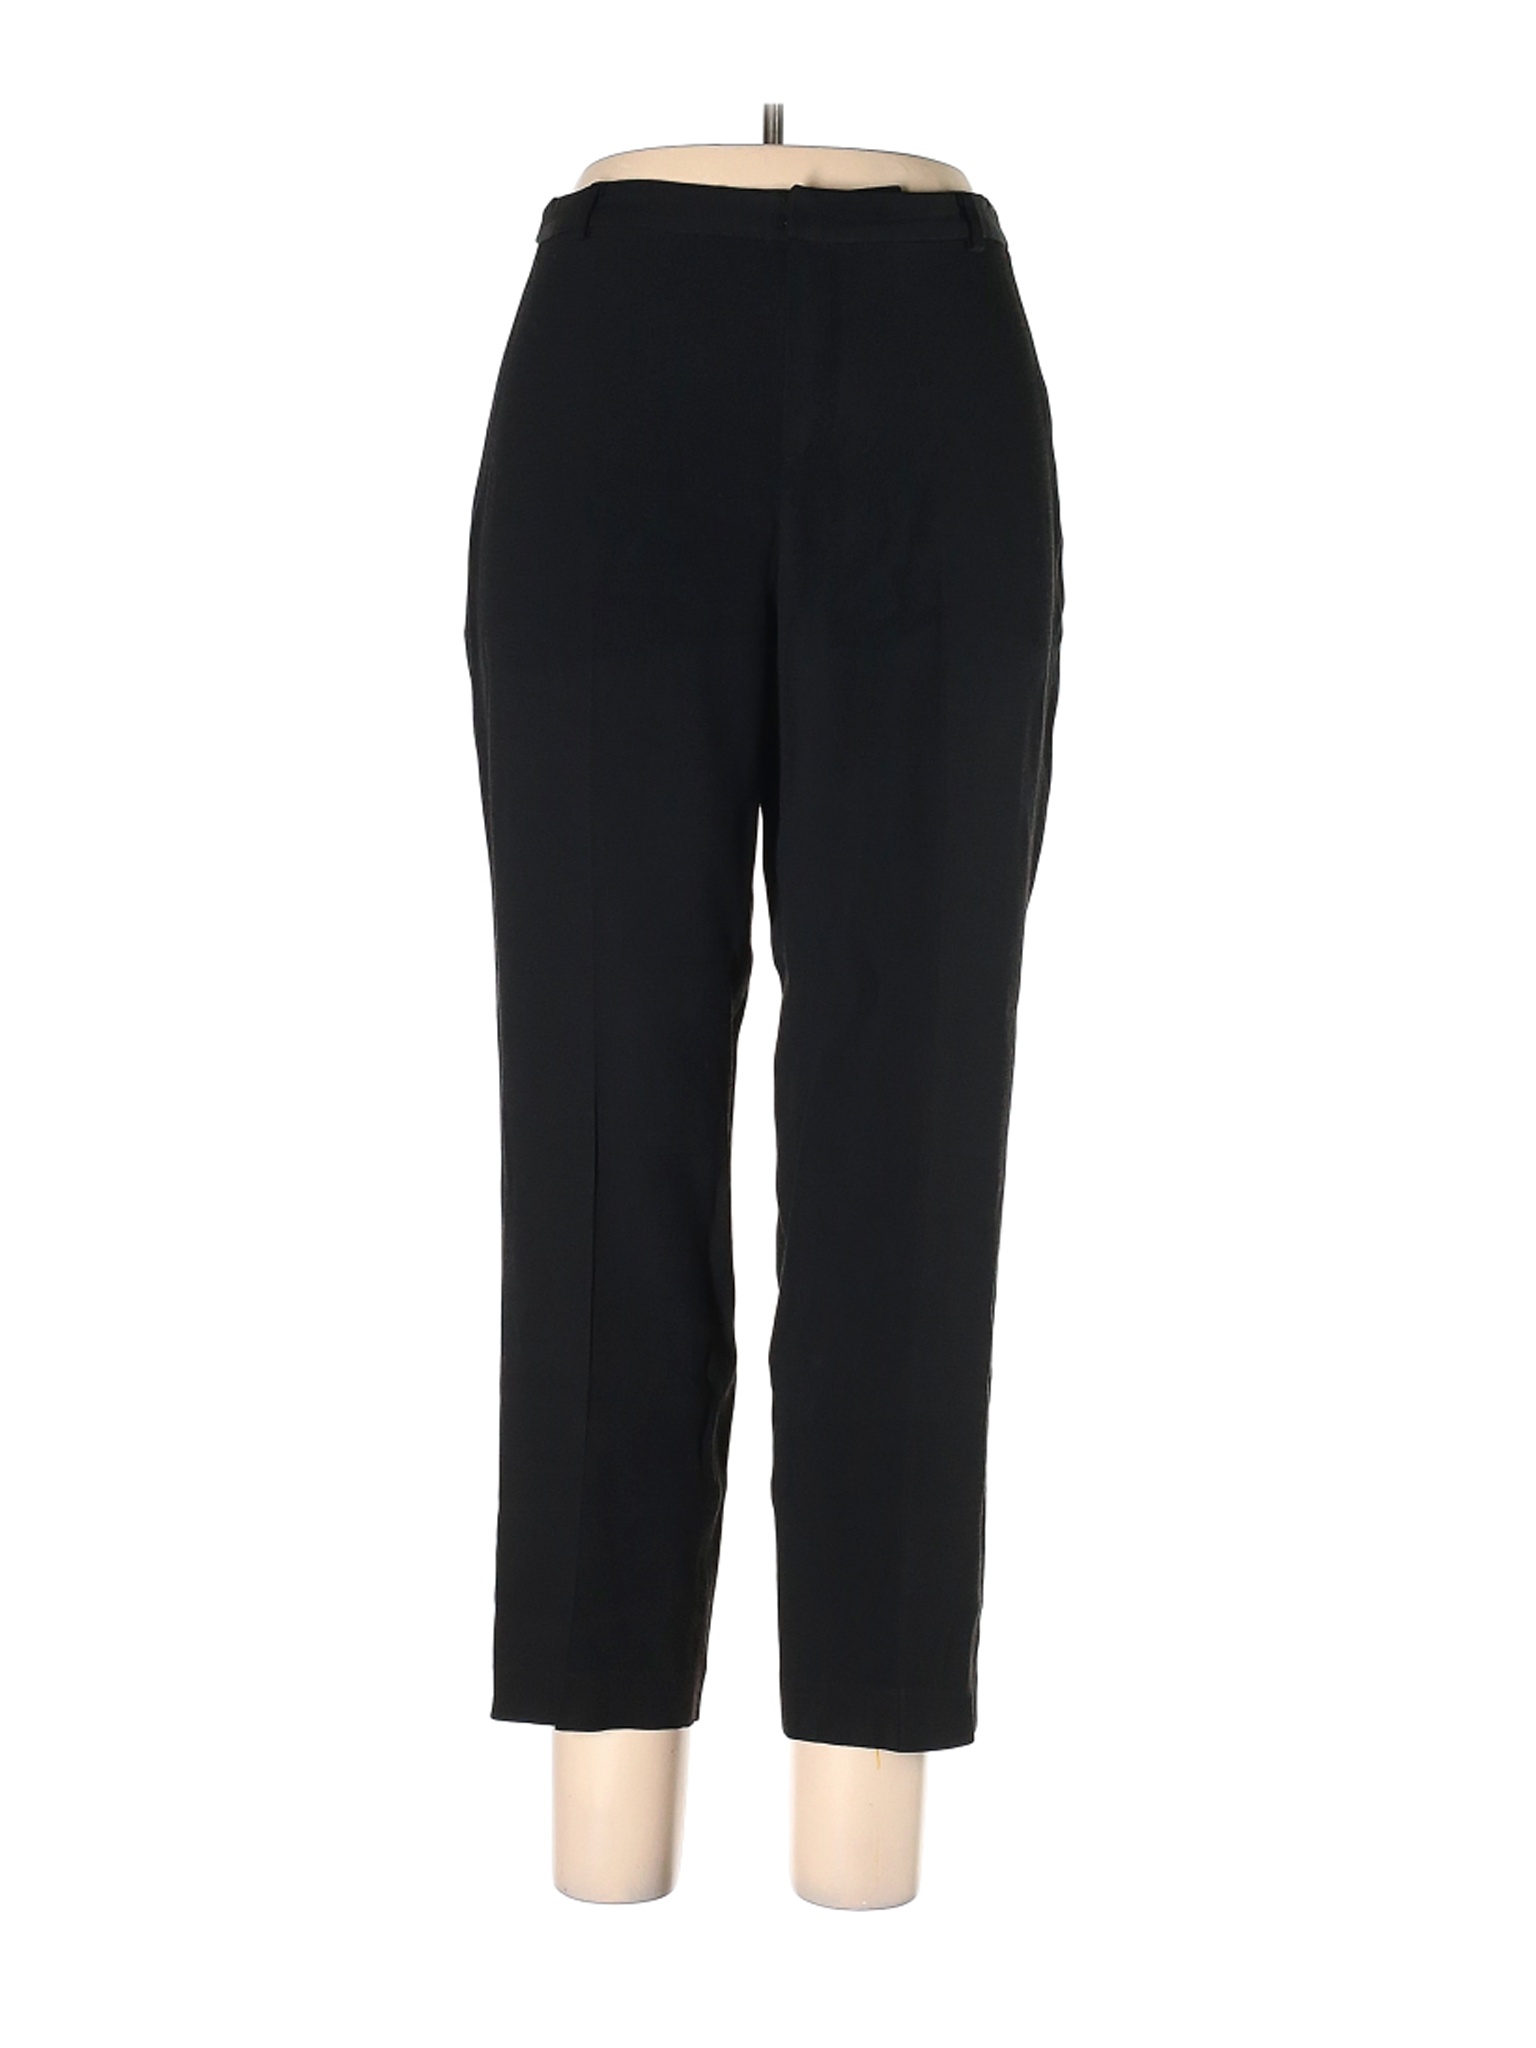 Linda Allard Ellen Tracy Women Black Dress Pants 12 Petites | eBay